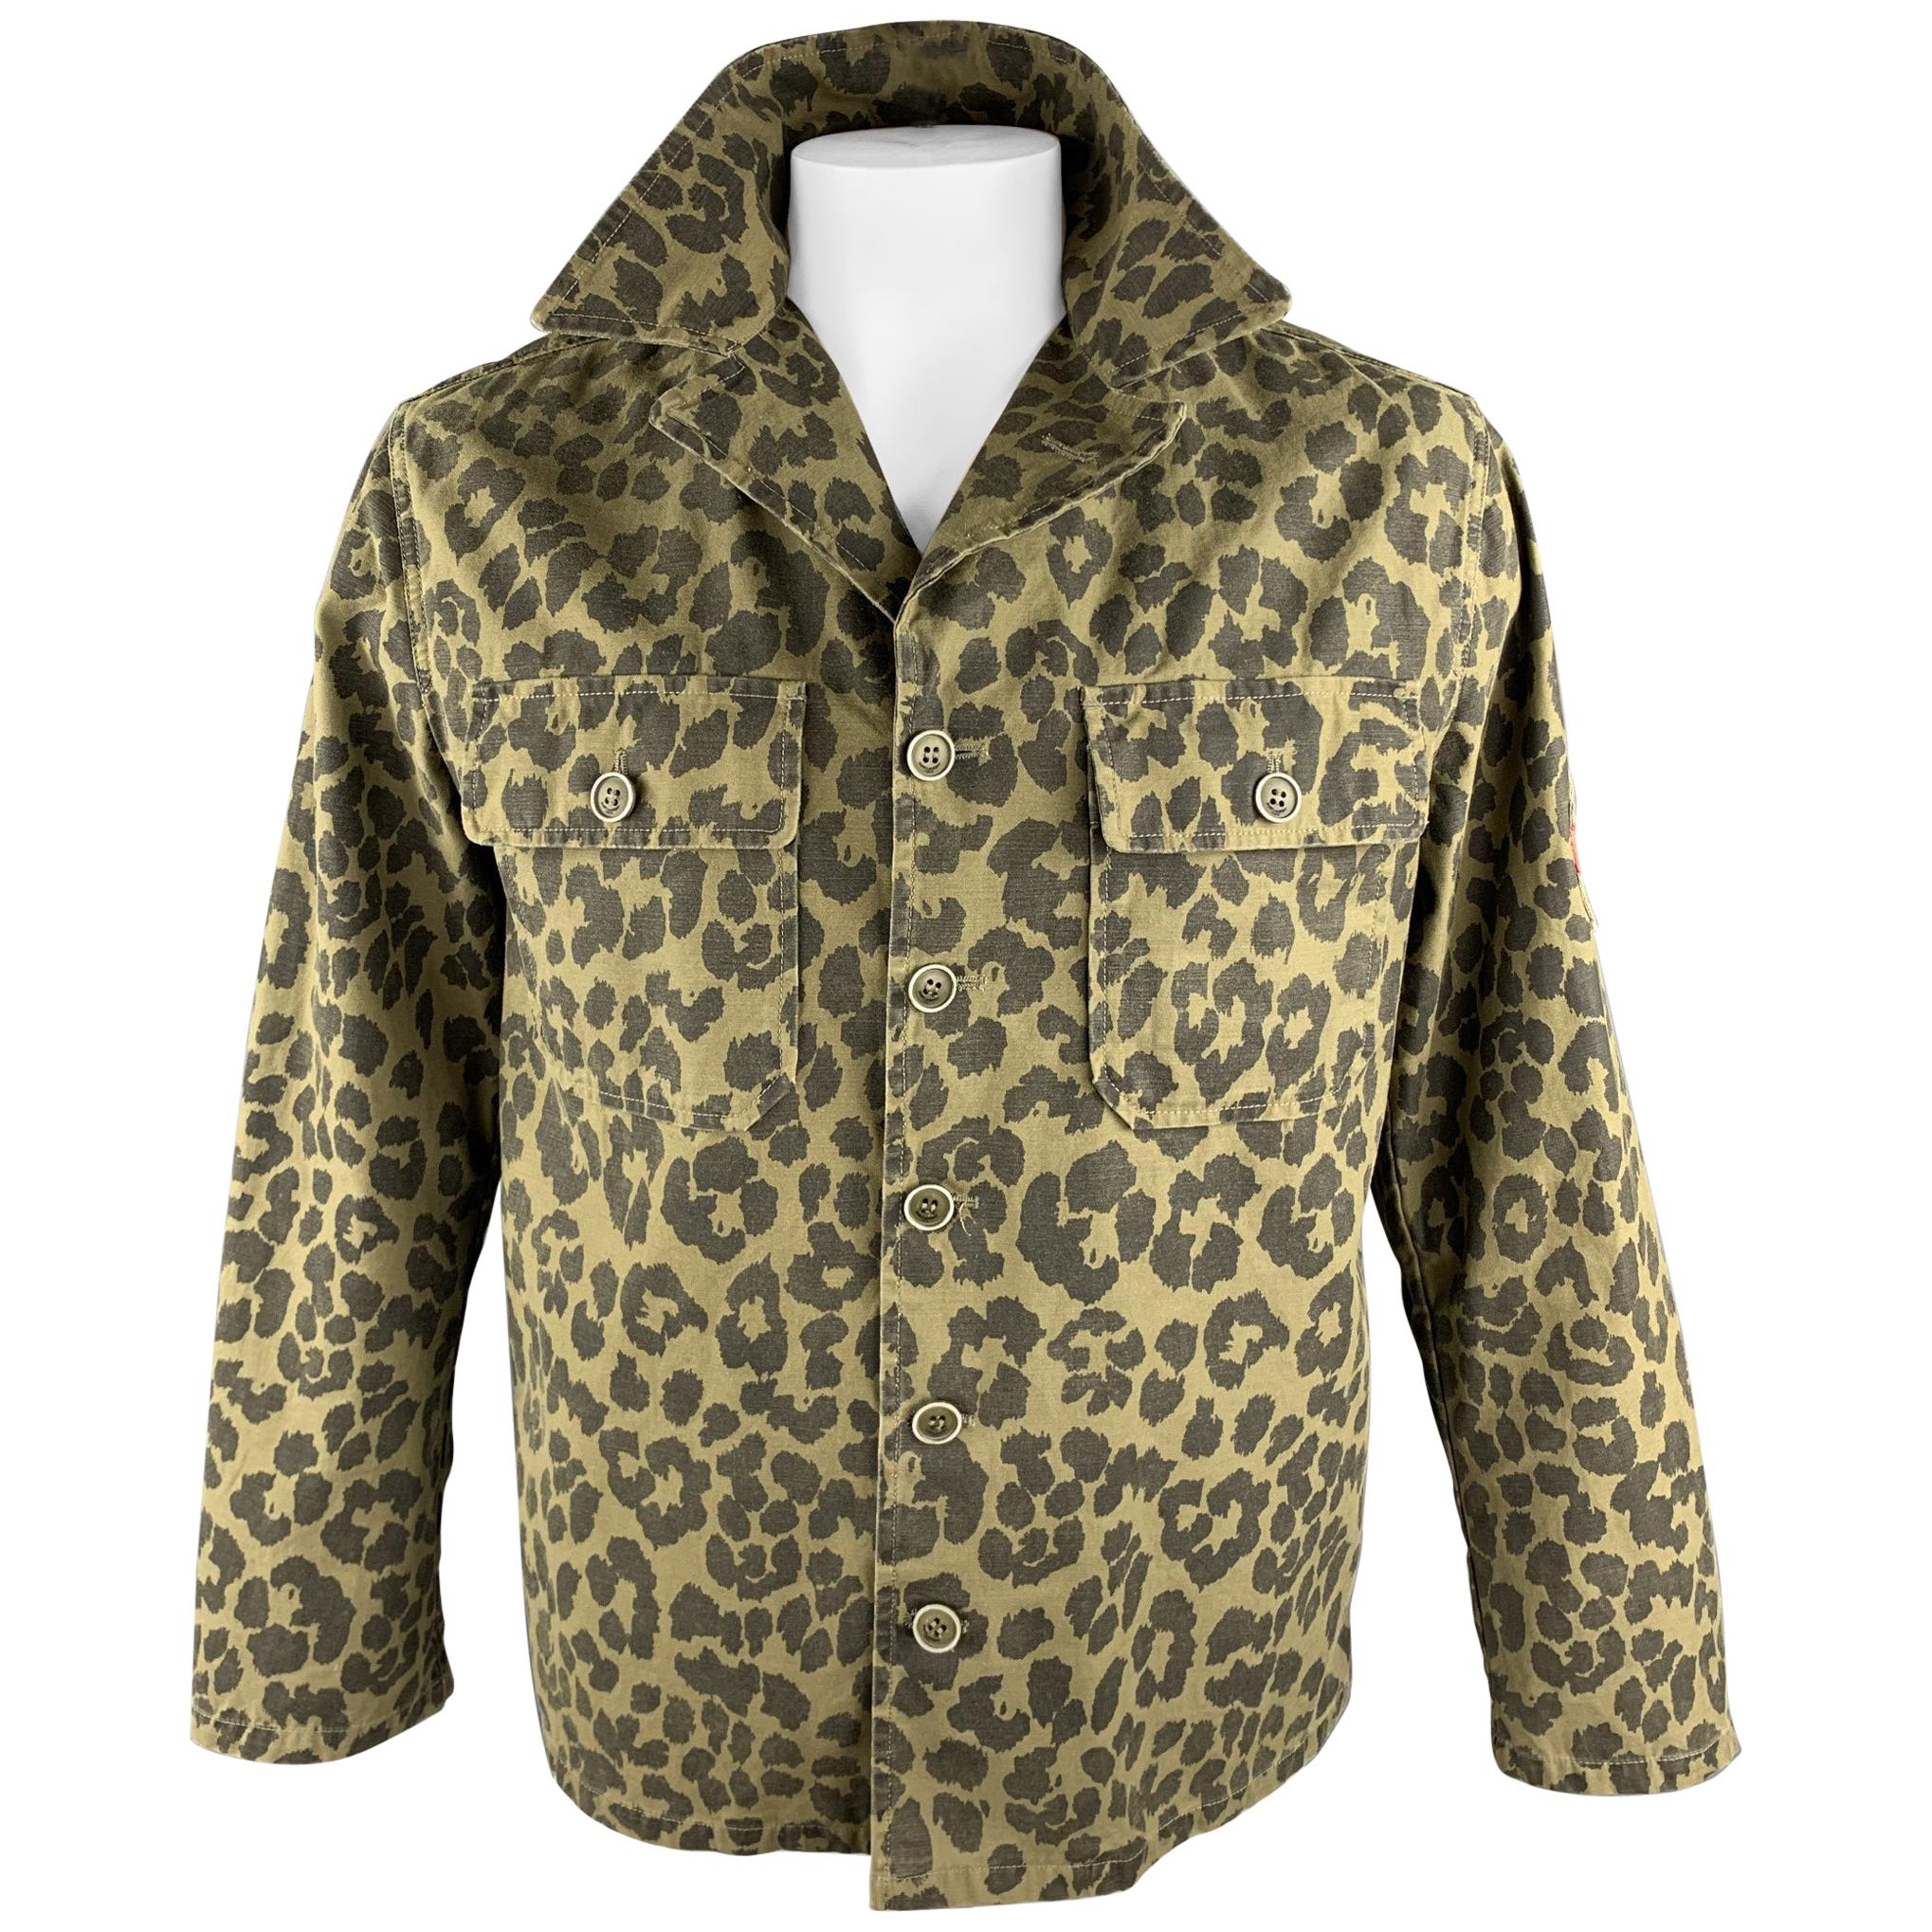 SAINT LAURENT Spring 2016 Size 40 Olive & Black Leopard Print Cotton Jacket